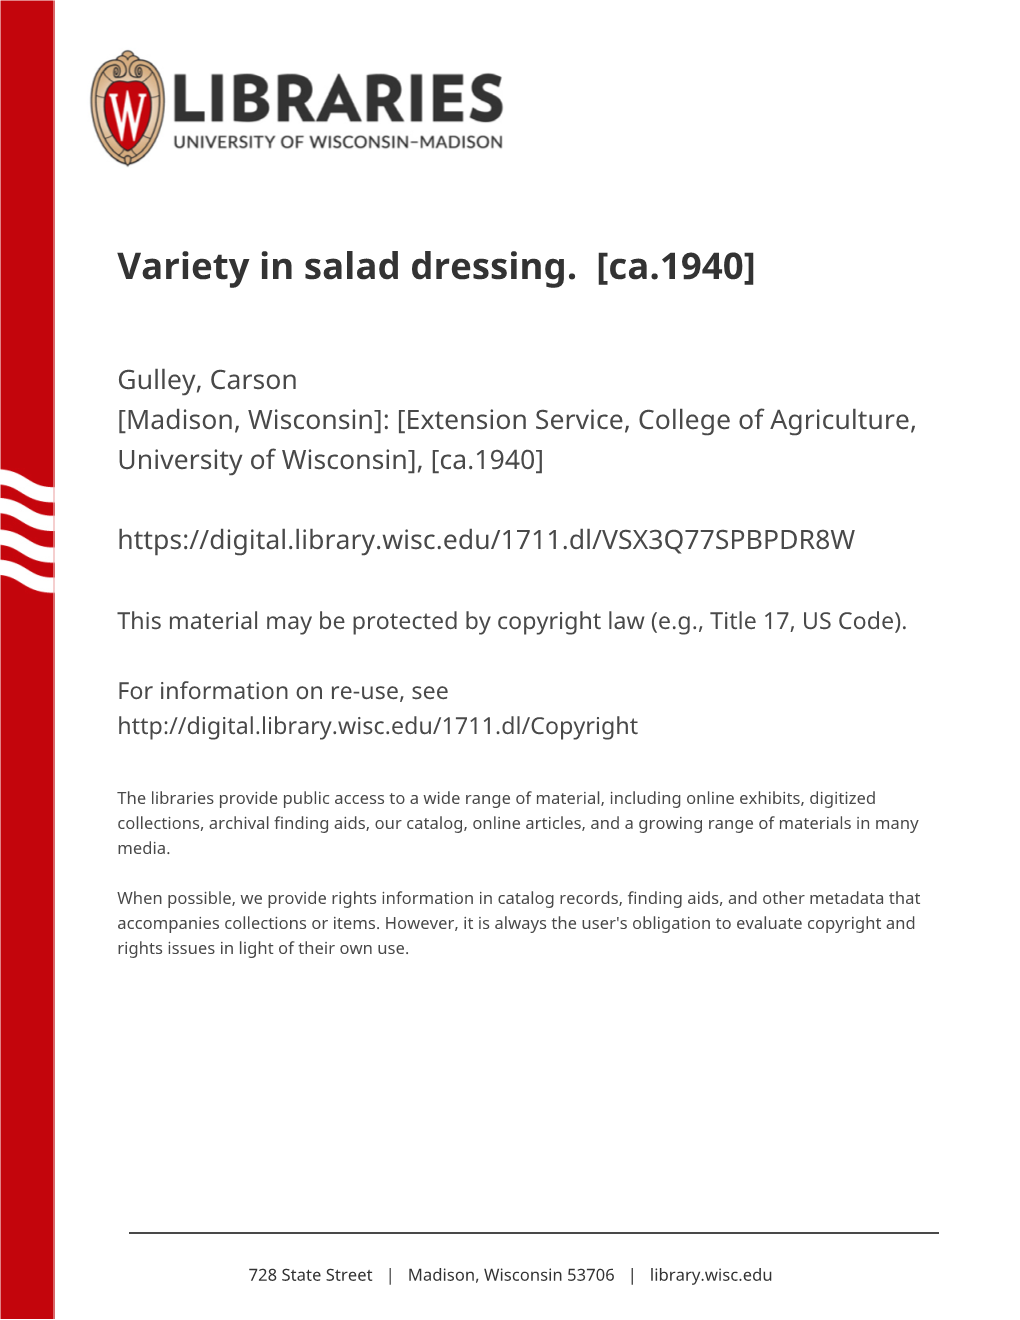 Variety in Salad Dressing. [Ca.1940]